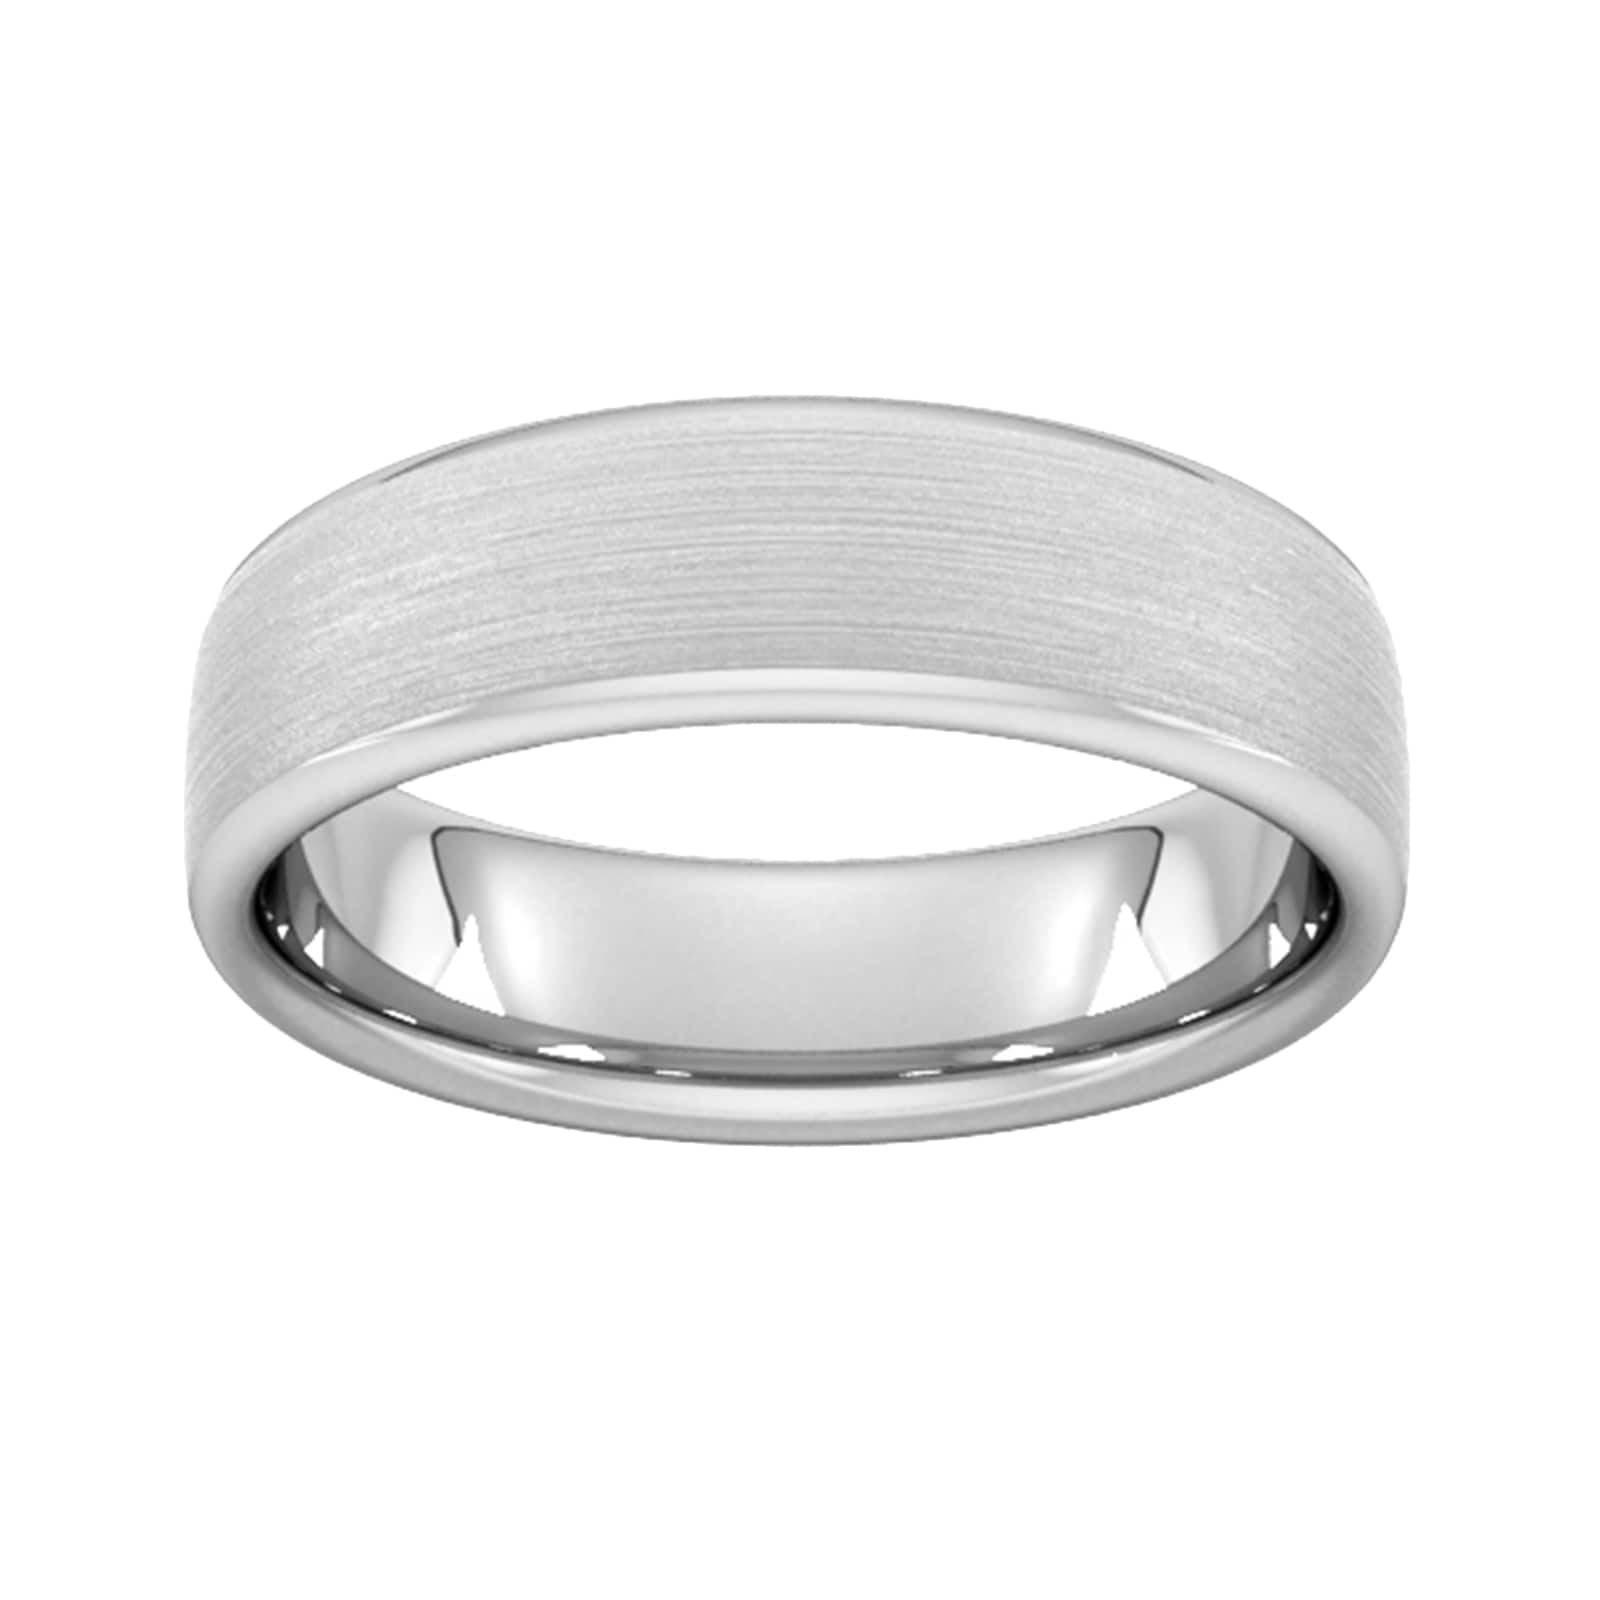 6mm D Shape Standard Matt Finished Wedding Ring In 9 Carat White Gold - Ring Size M